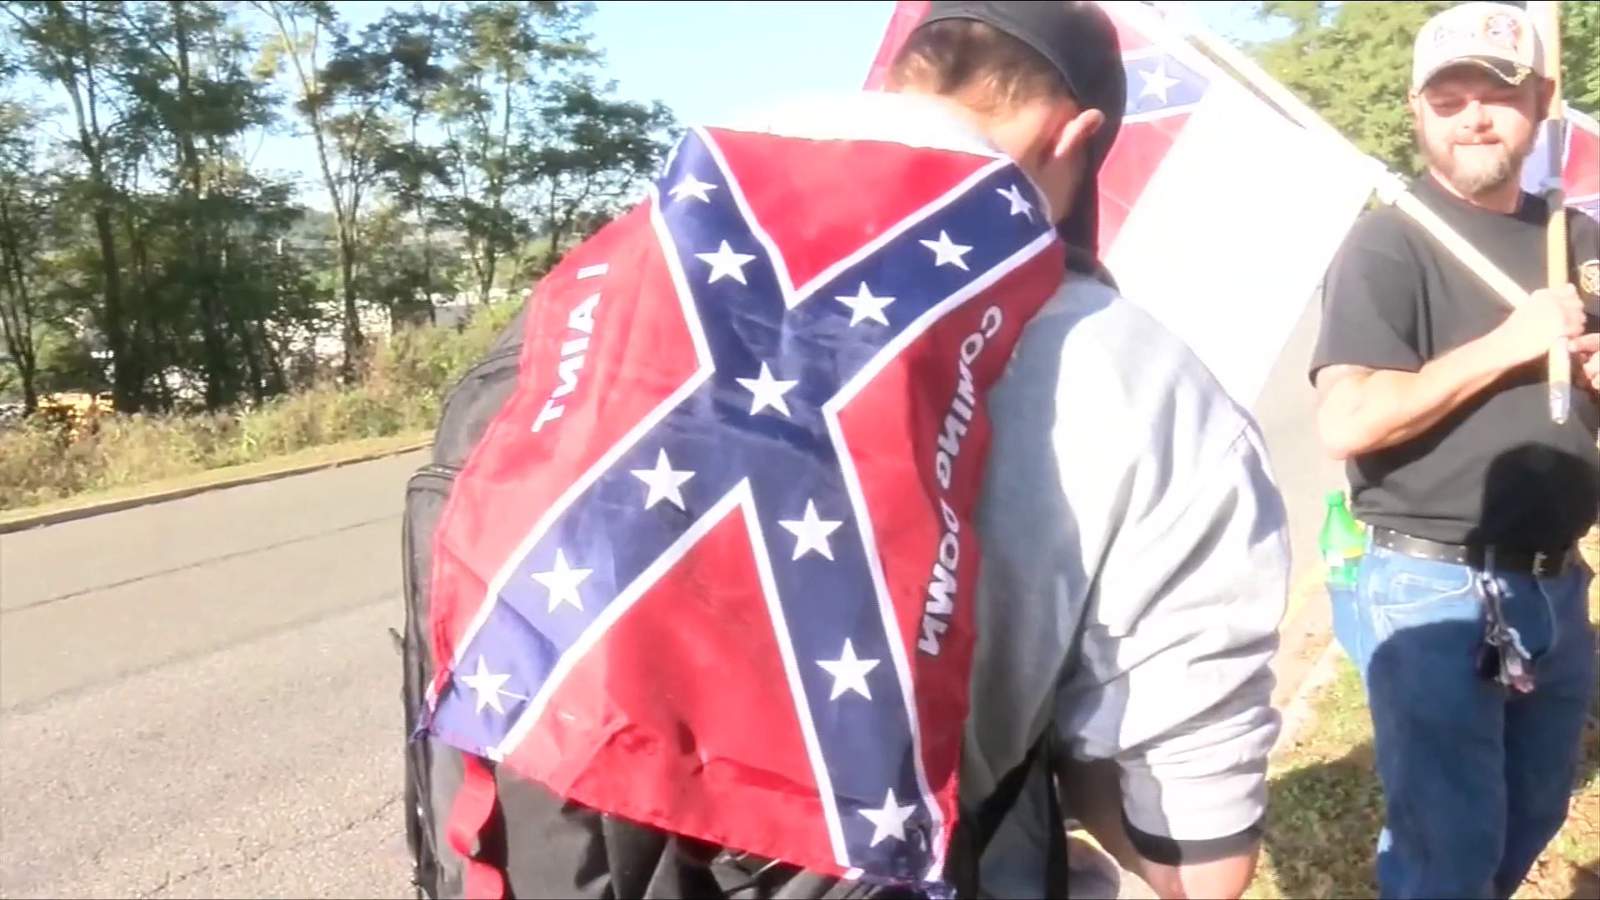 Franklin County Public Schools ban Confederate flag from dress code